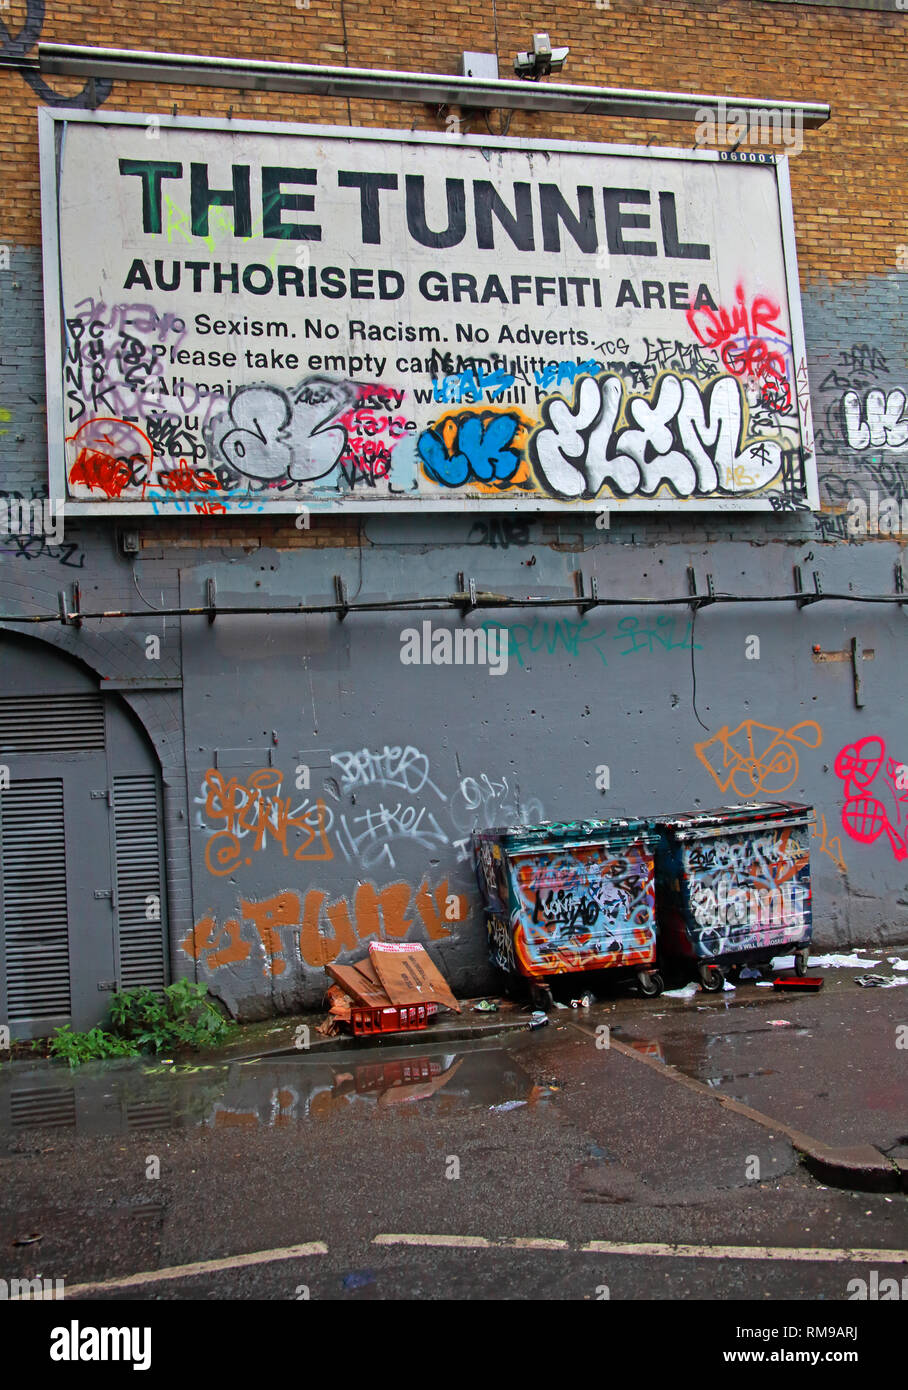 Le Tunnel, autorisés Zone Graffiti, Leake Street, Waterloo, Lambeth, Londres, Angleterre du Sud-Est, Royaume-Uni, SE1 7NN Banque D'Images